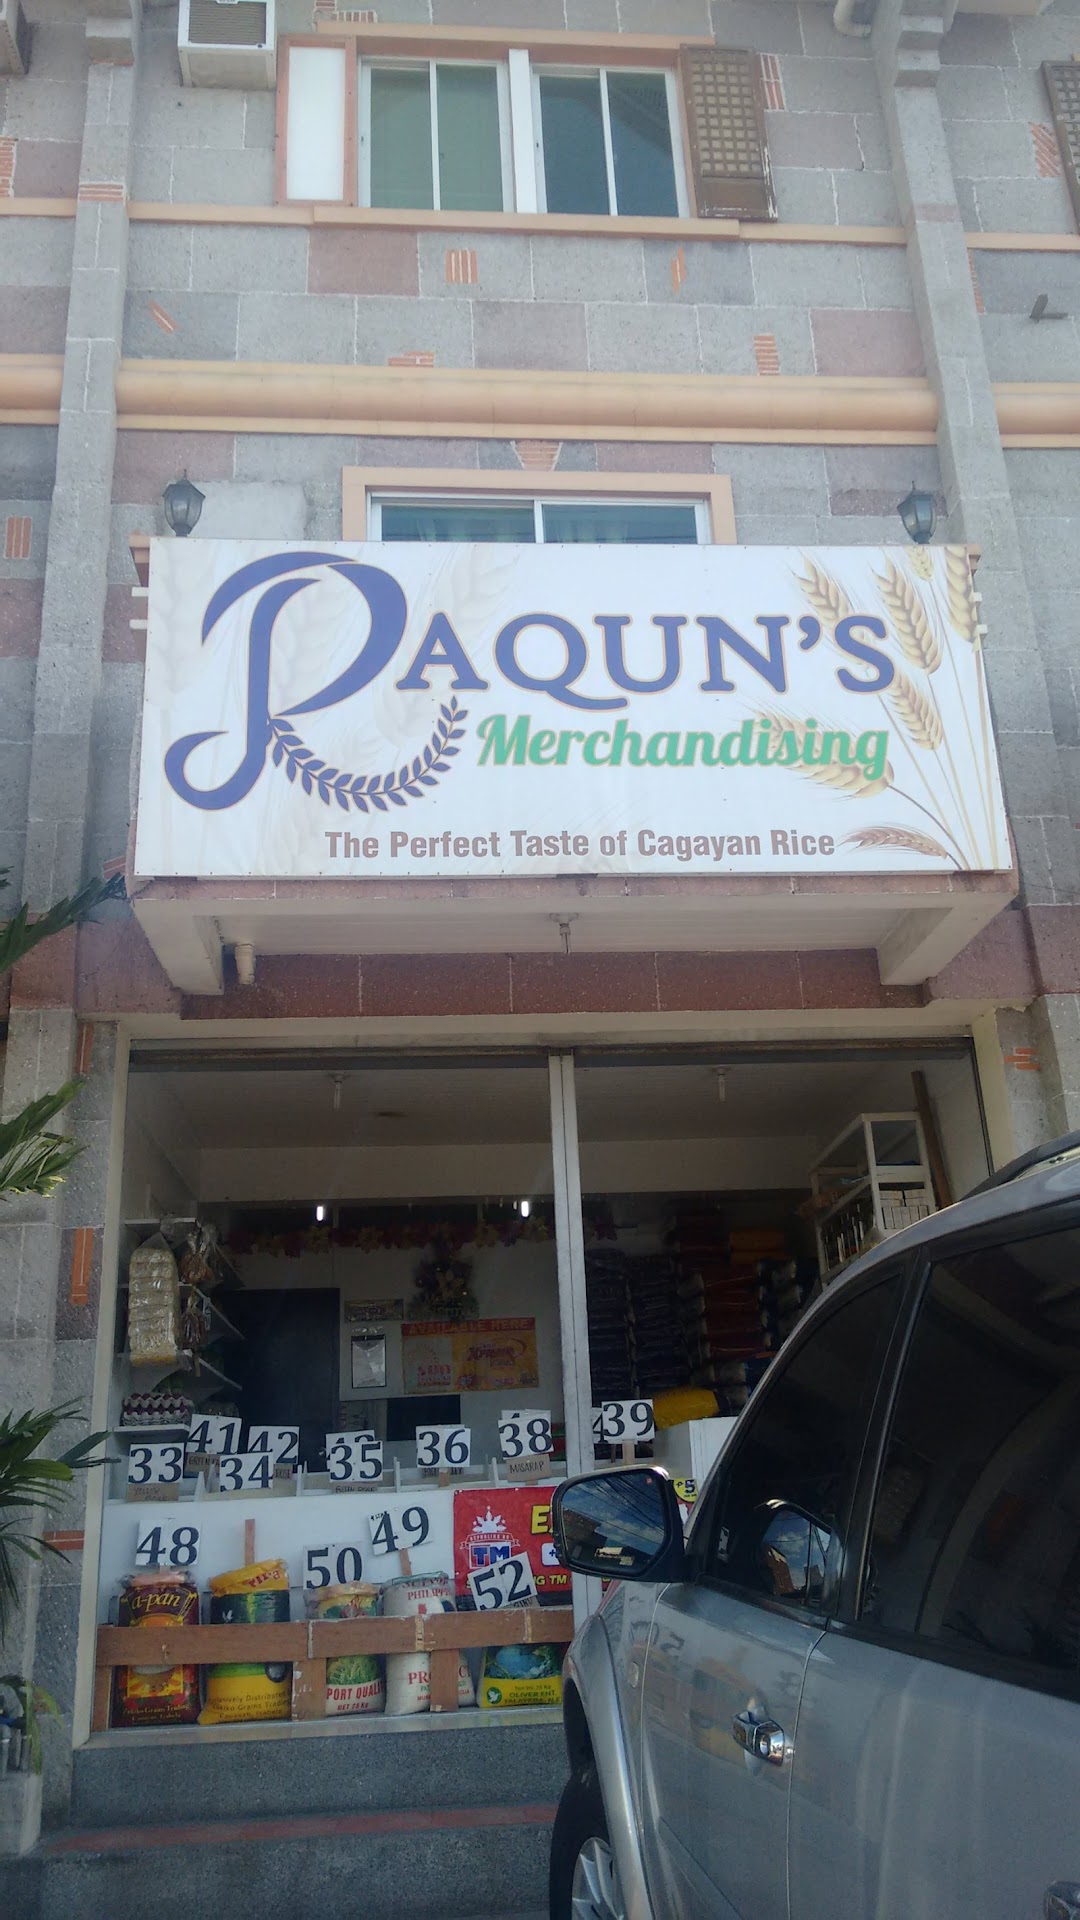 Raquns Merchandising